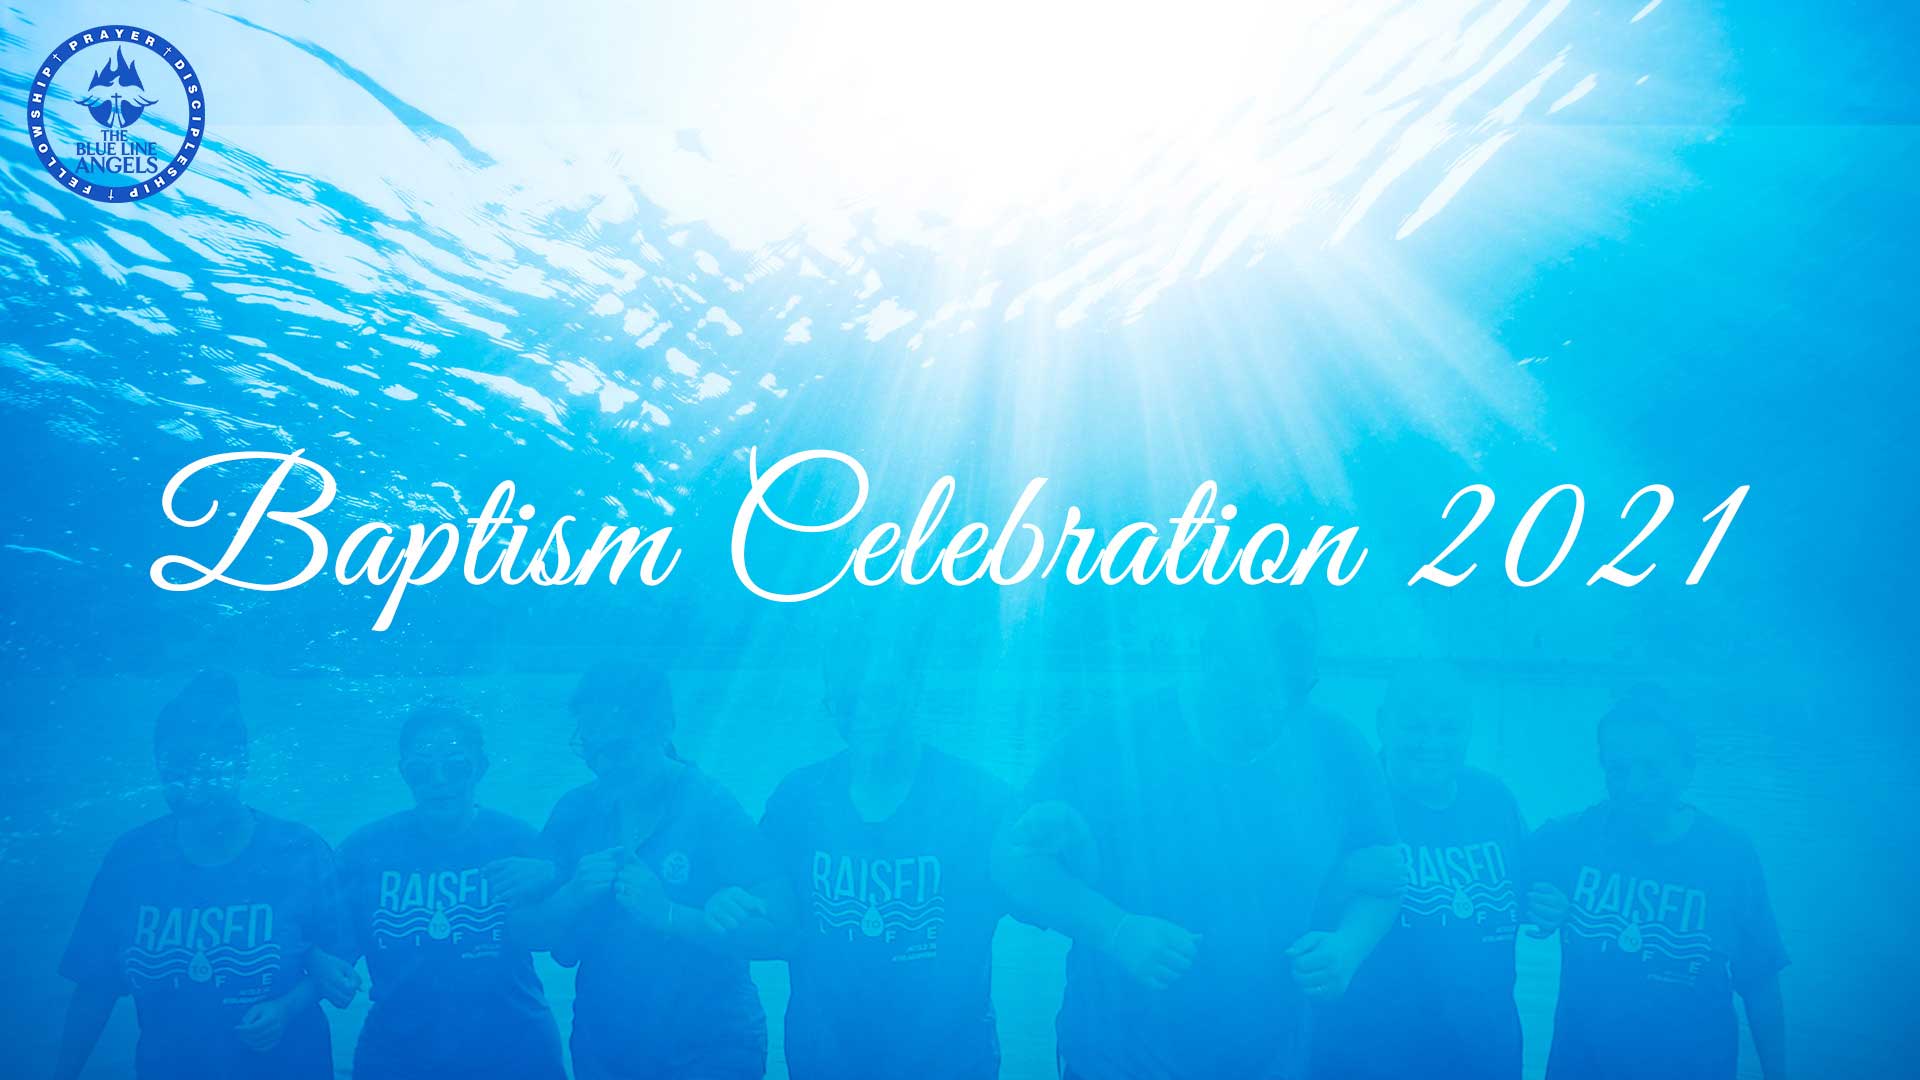 Baptism Celebration 2021